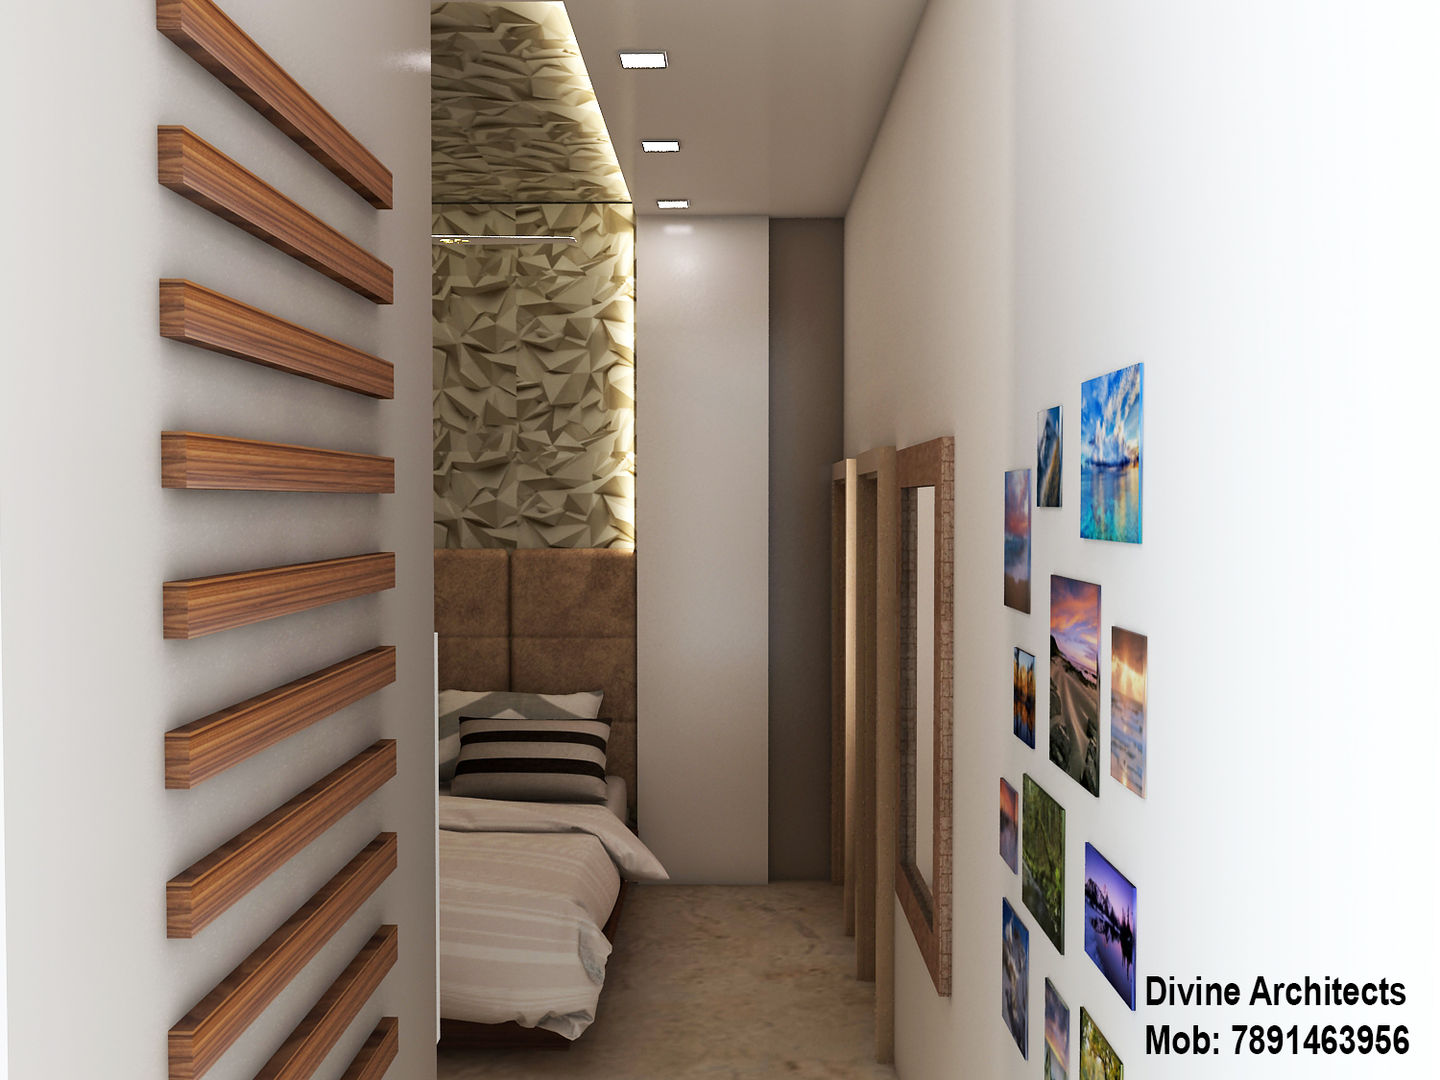 Another bed room interior design for mr. Shyam Gupta Bikaner Rajasthan, divine architects divine architects Bedroom